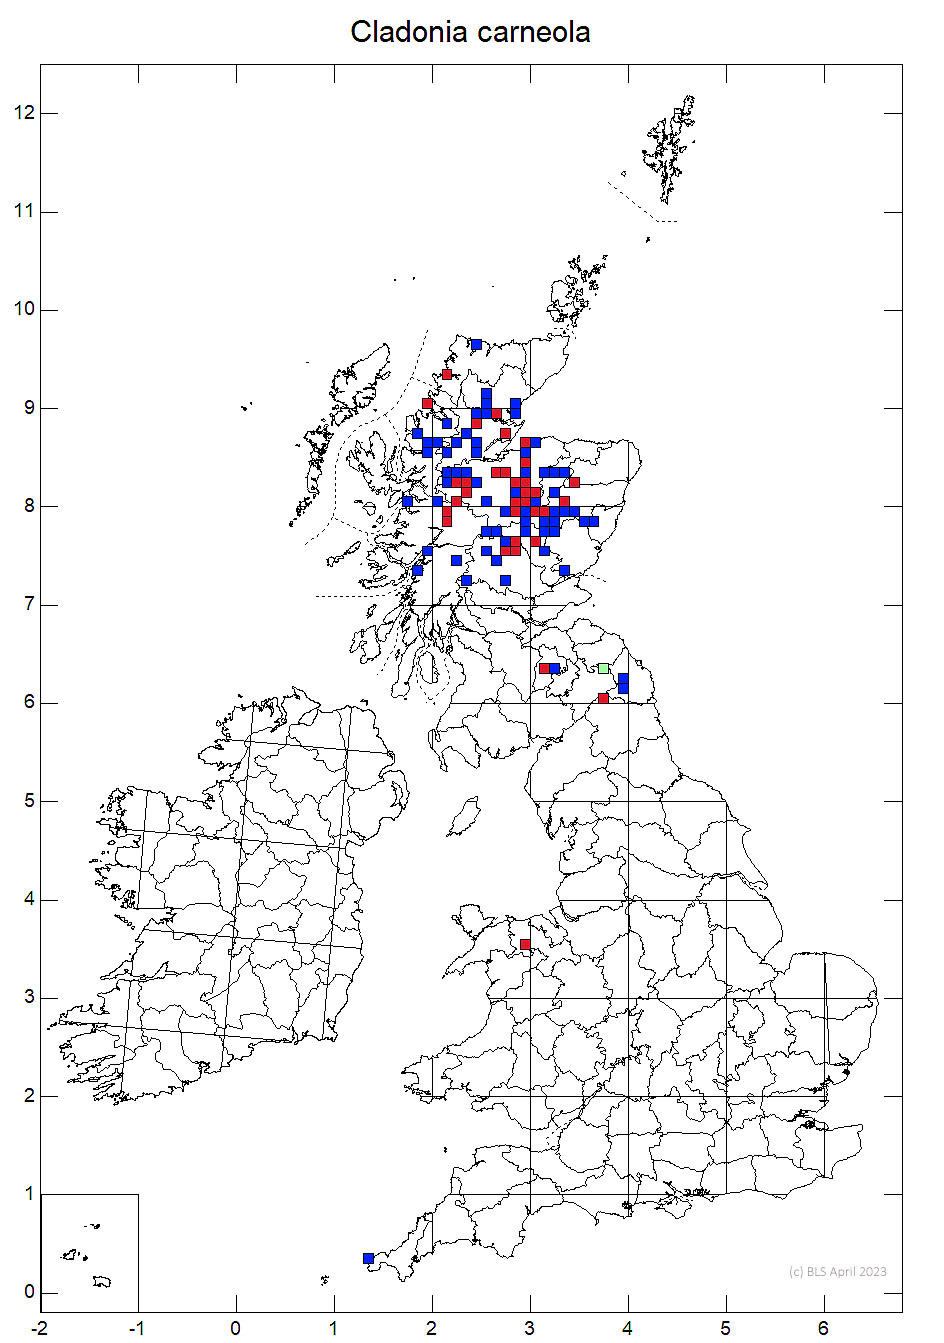 Cladonia carneola 10km sq distribution map